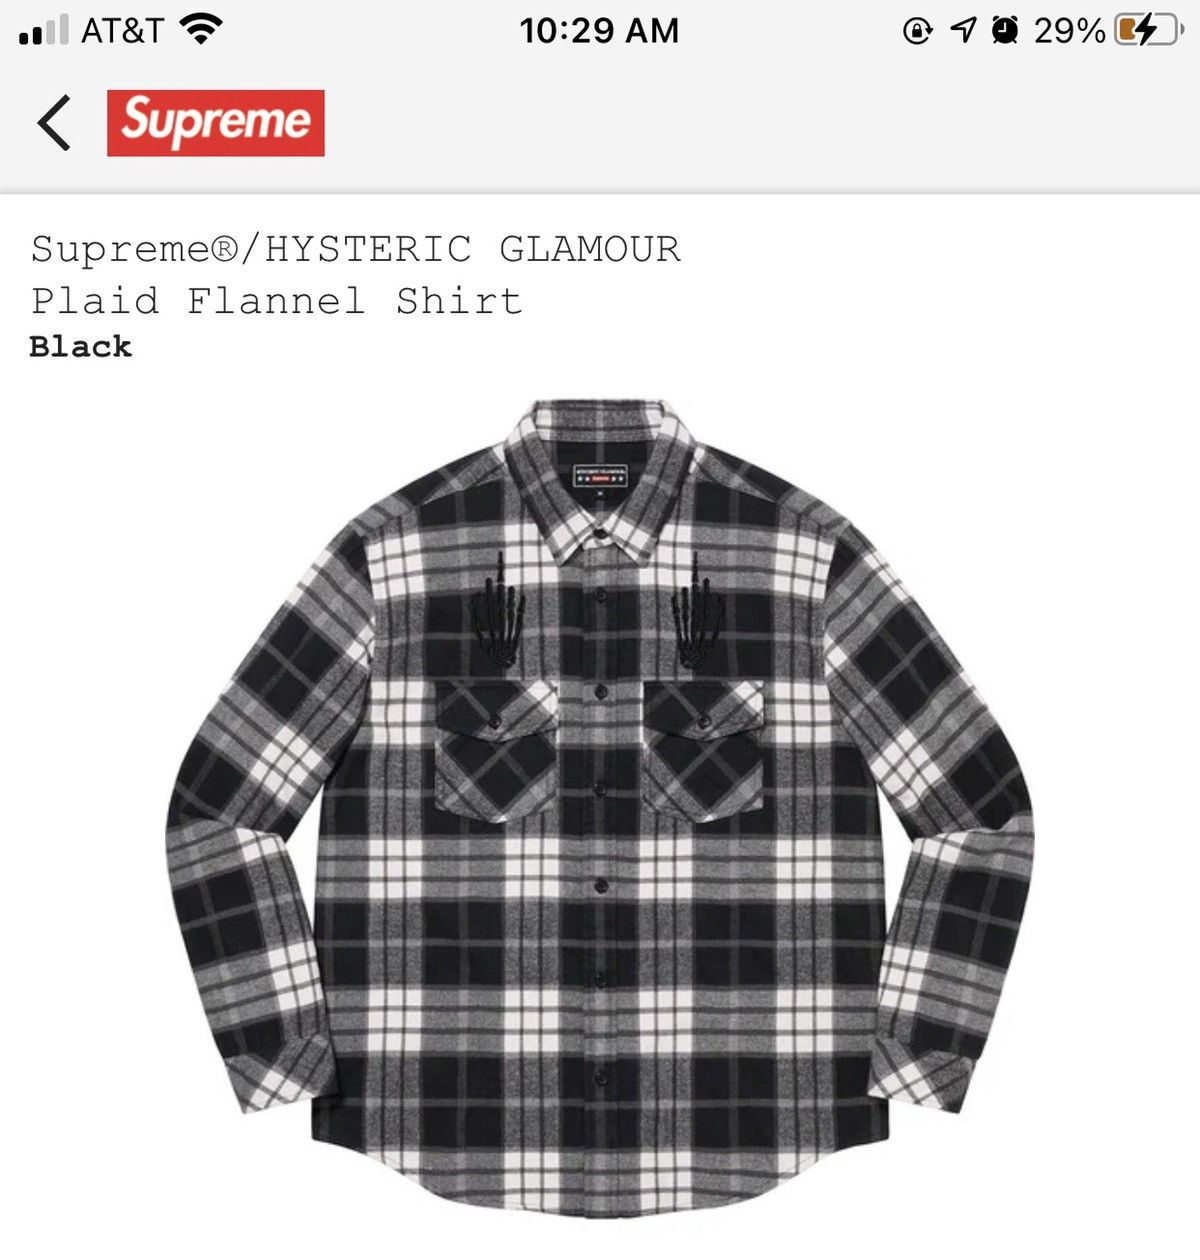 Supreme Supreme x hysteric glamour plaid flannel shirt xl black | Grailed